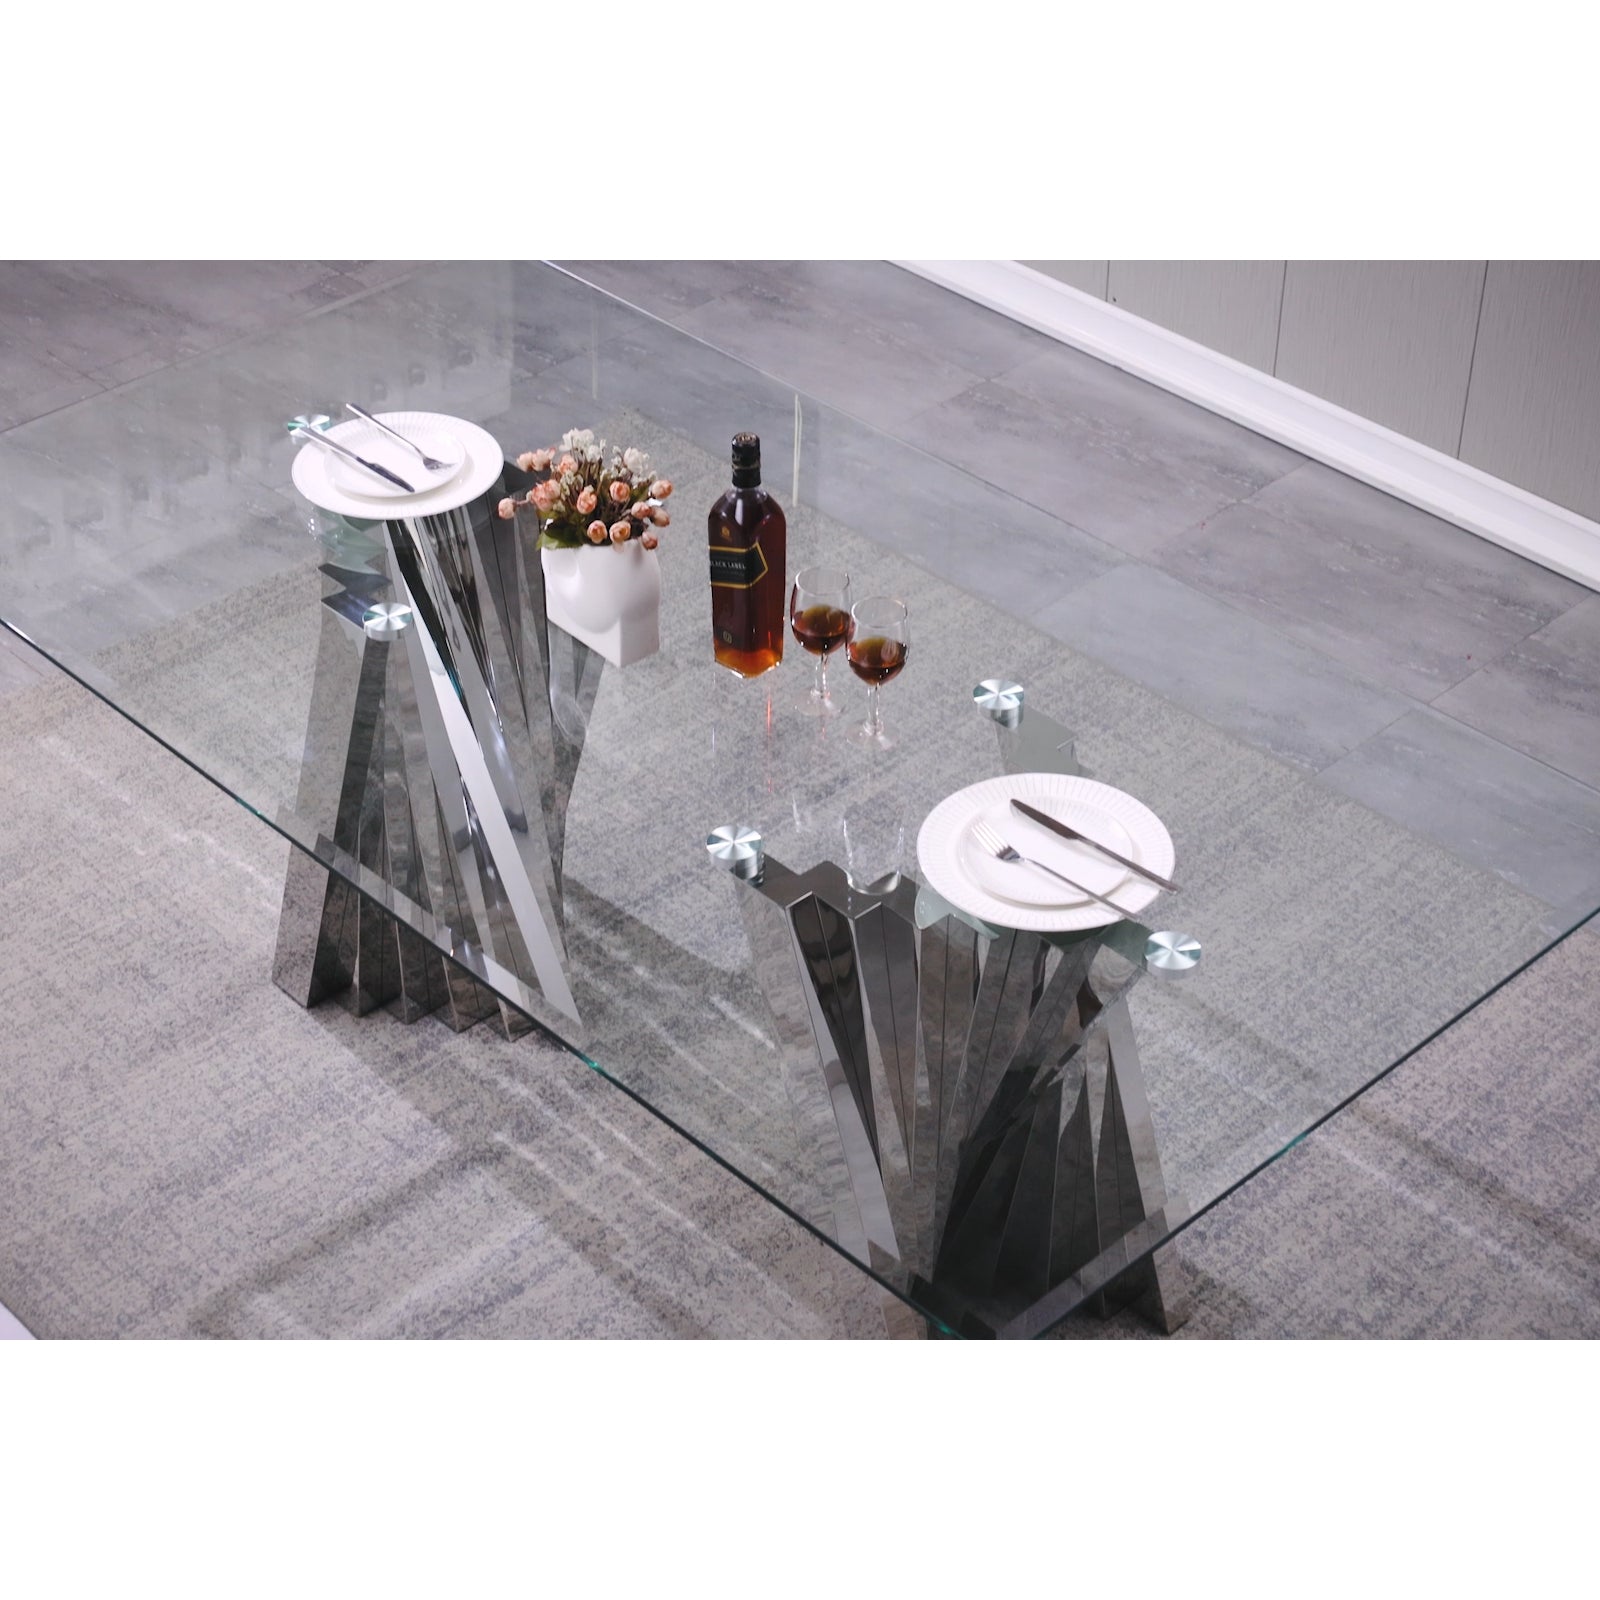 667-Set | AUZ Glass Dining room Sets for 6